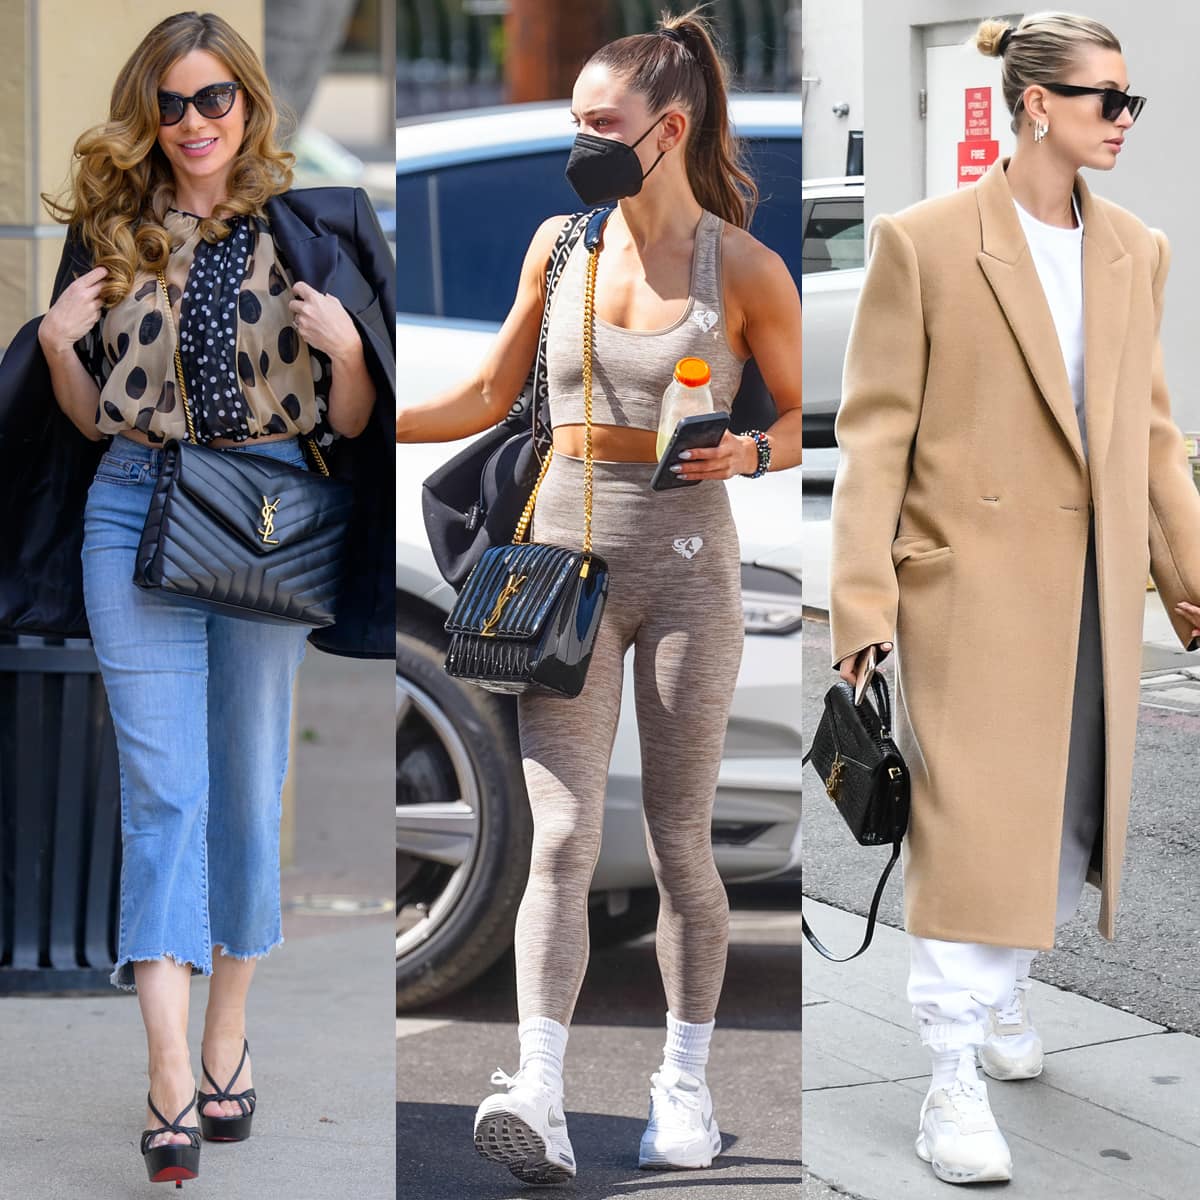 Sofia Vergara, Jenna Johnson, and Hailey Bieber carrying Saint Laurent bags